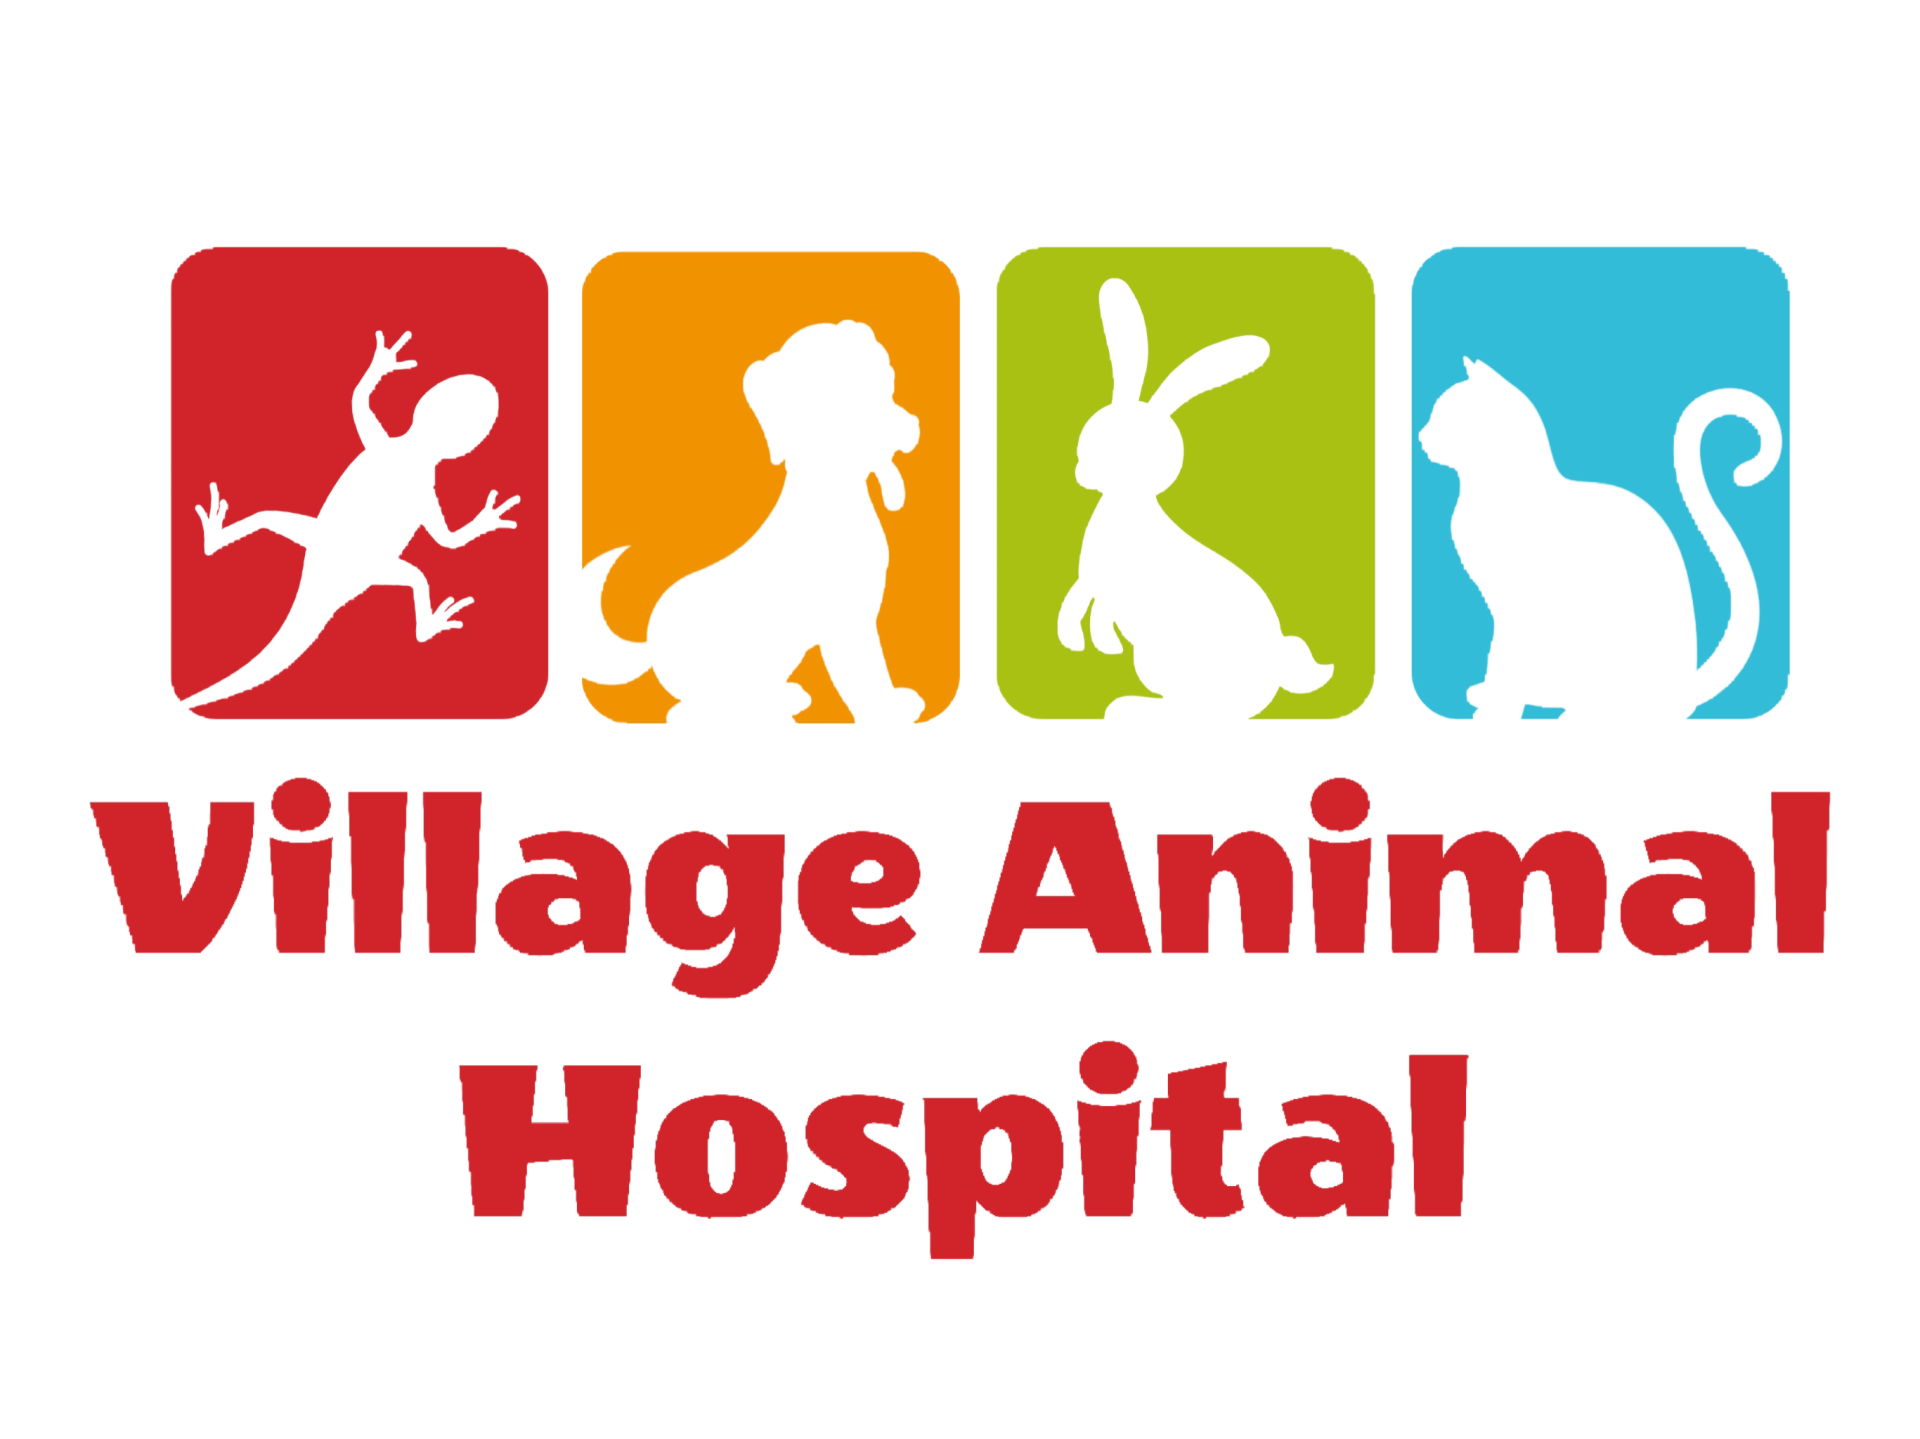 Village Animal Hospital logo